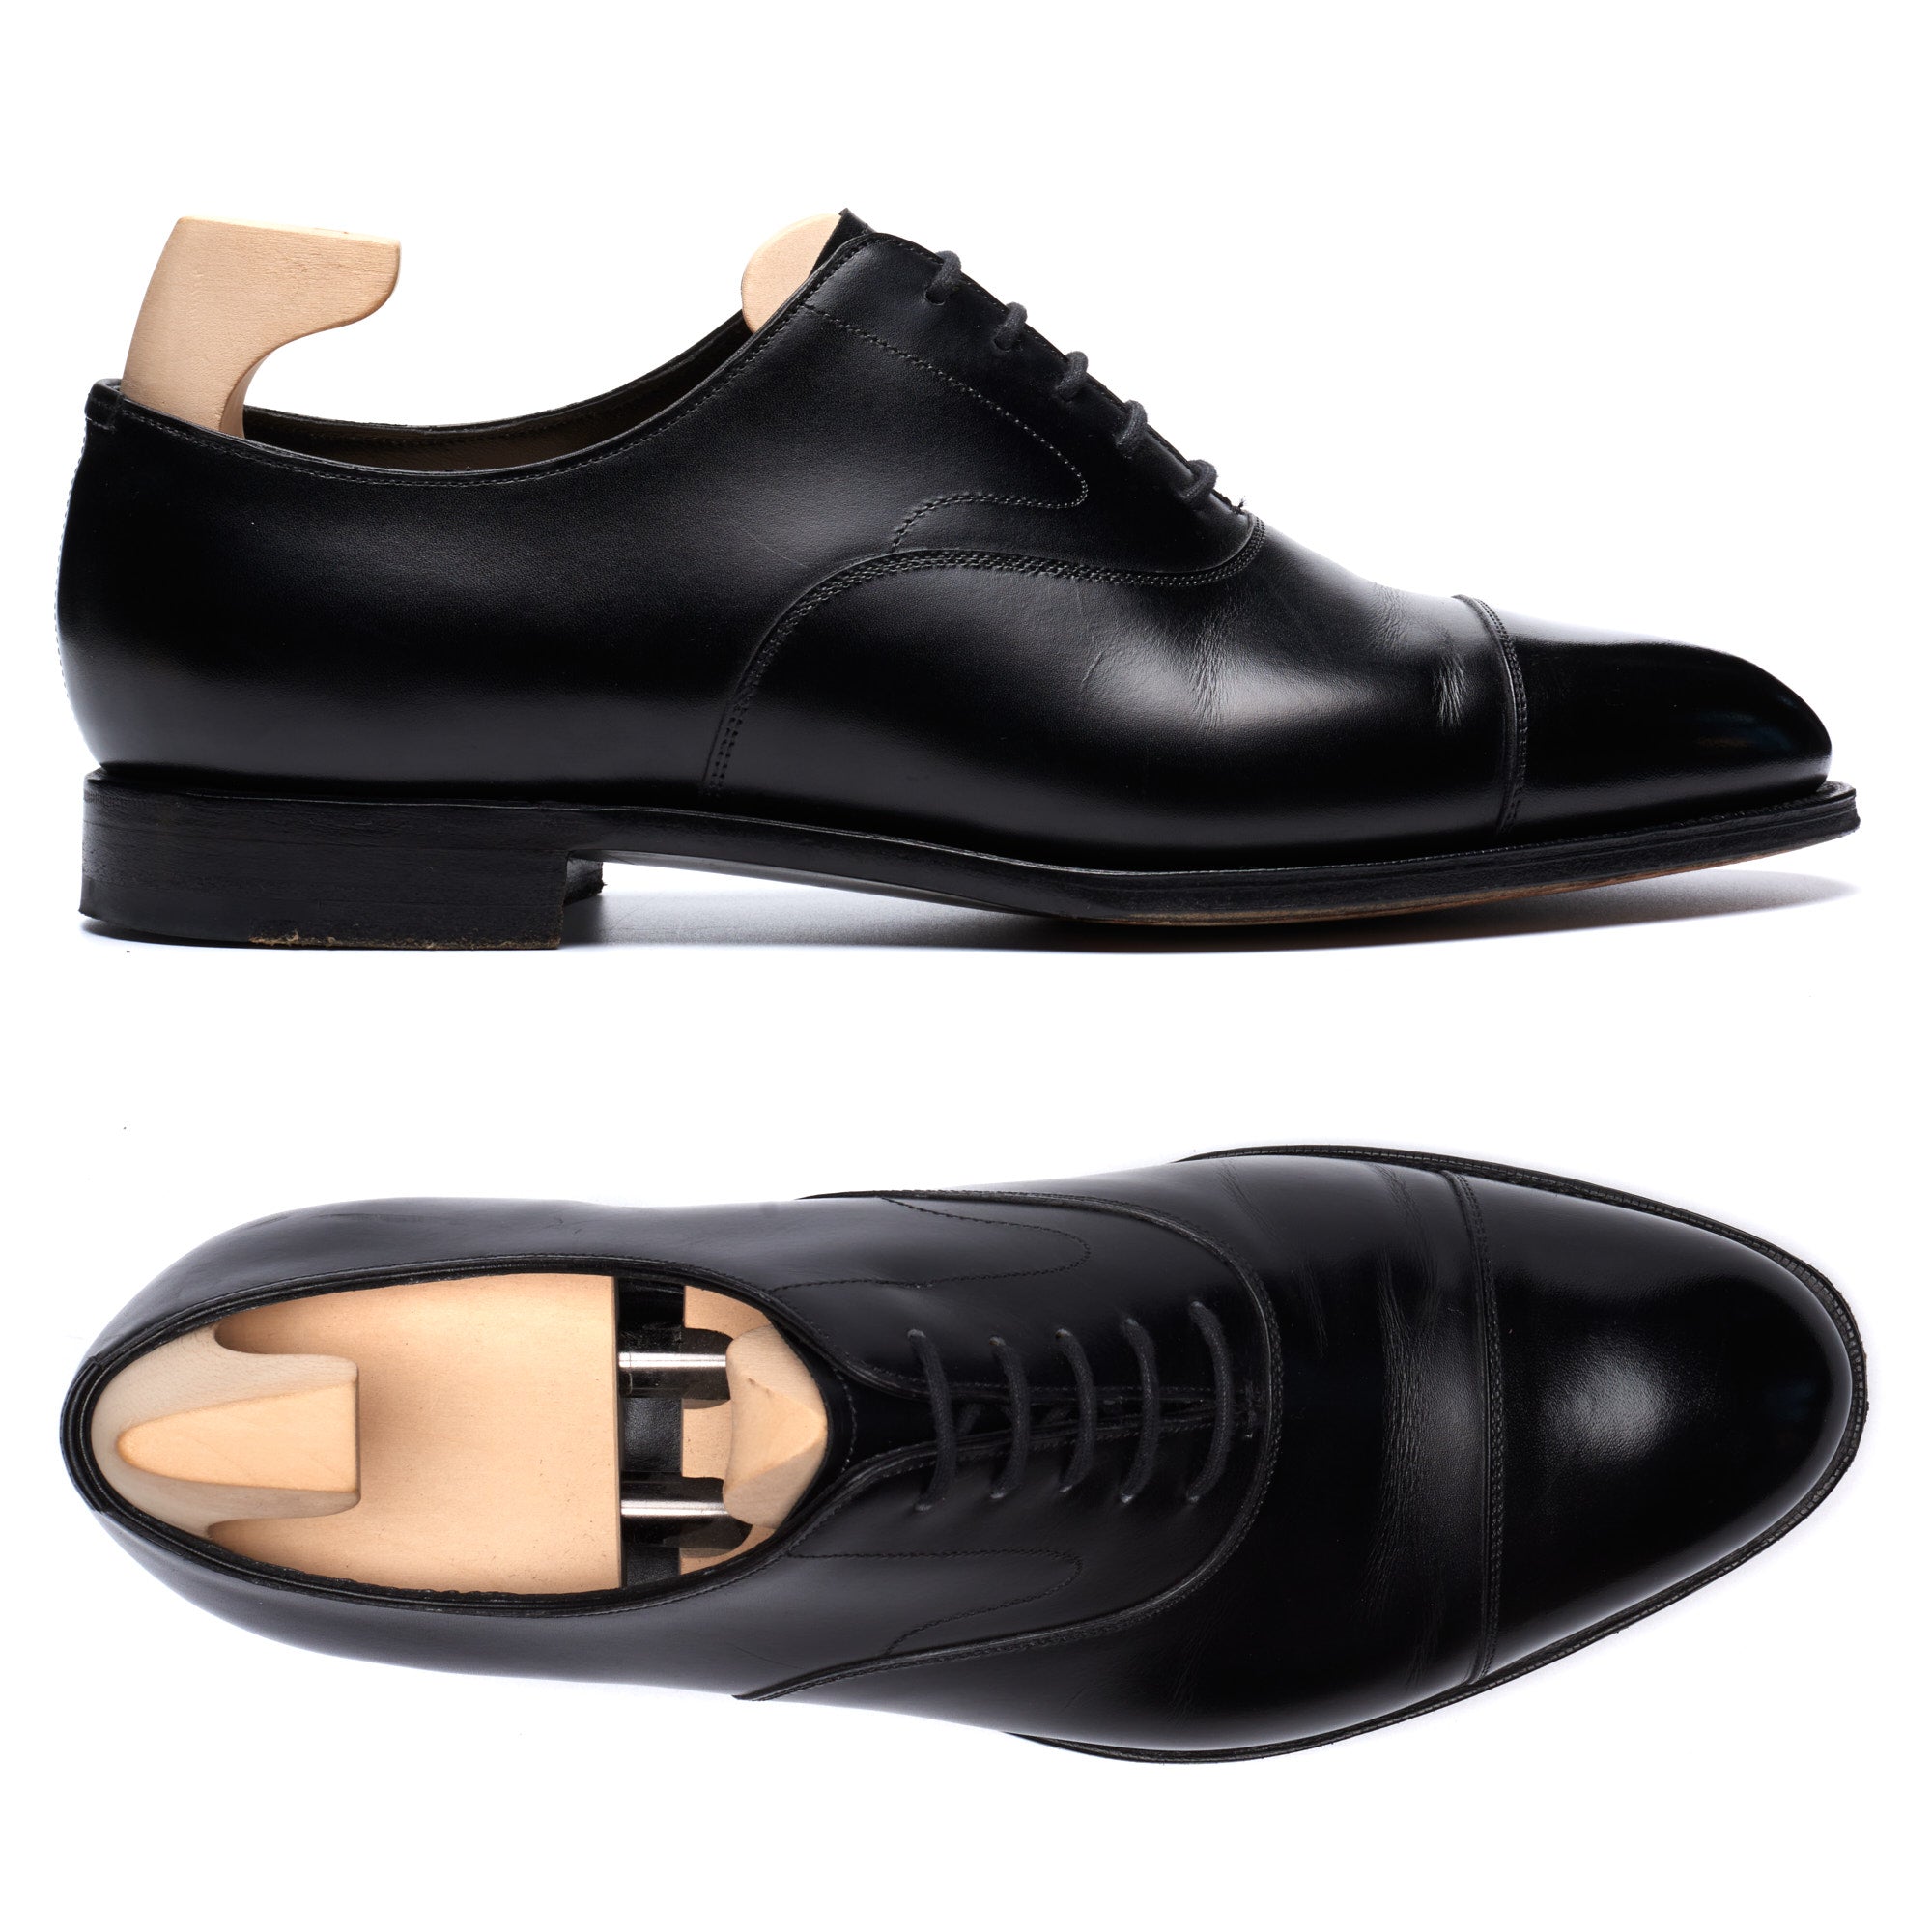 EDWARD GREEN Chelsea Black Calf Leather Oxford Dress Shoes UK 8.5